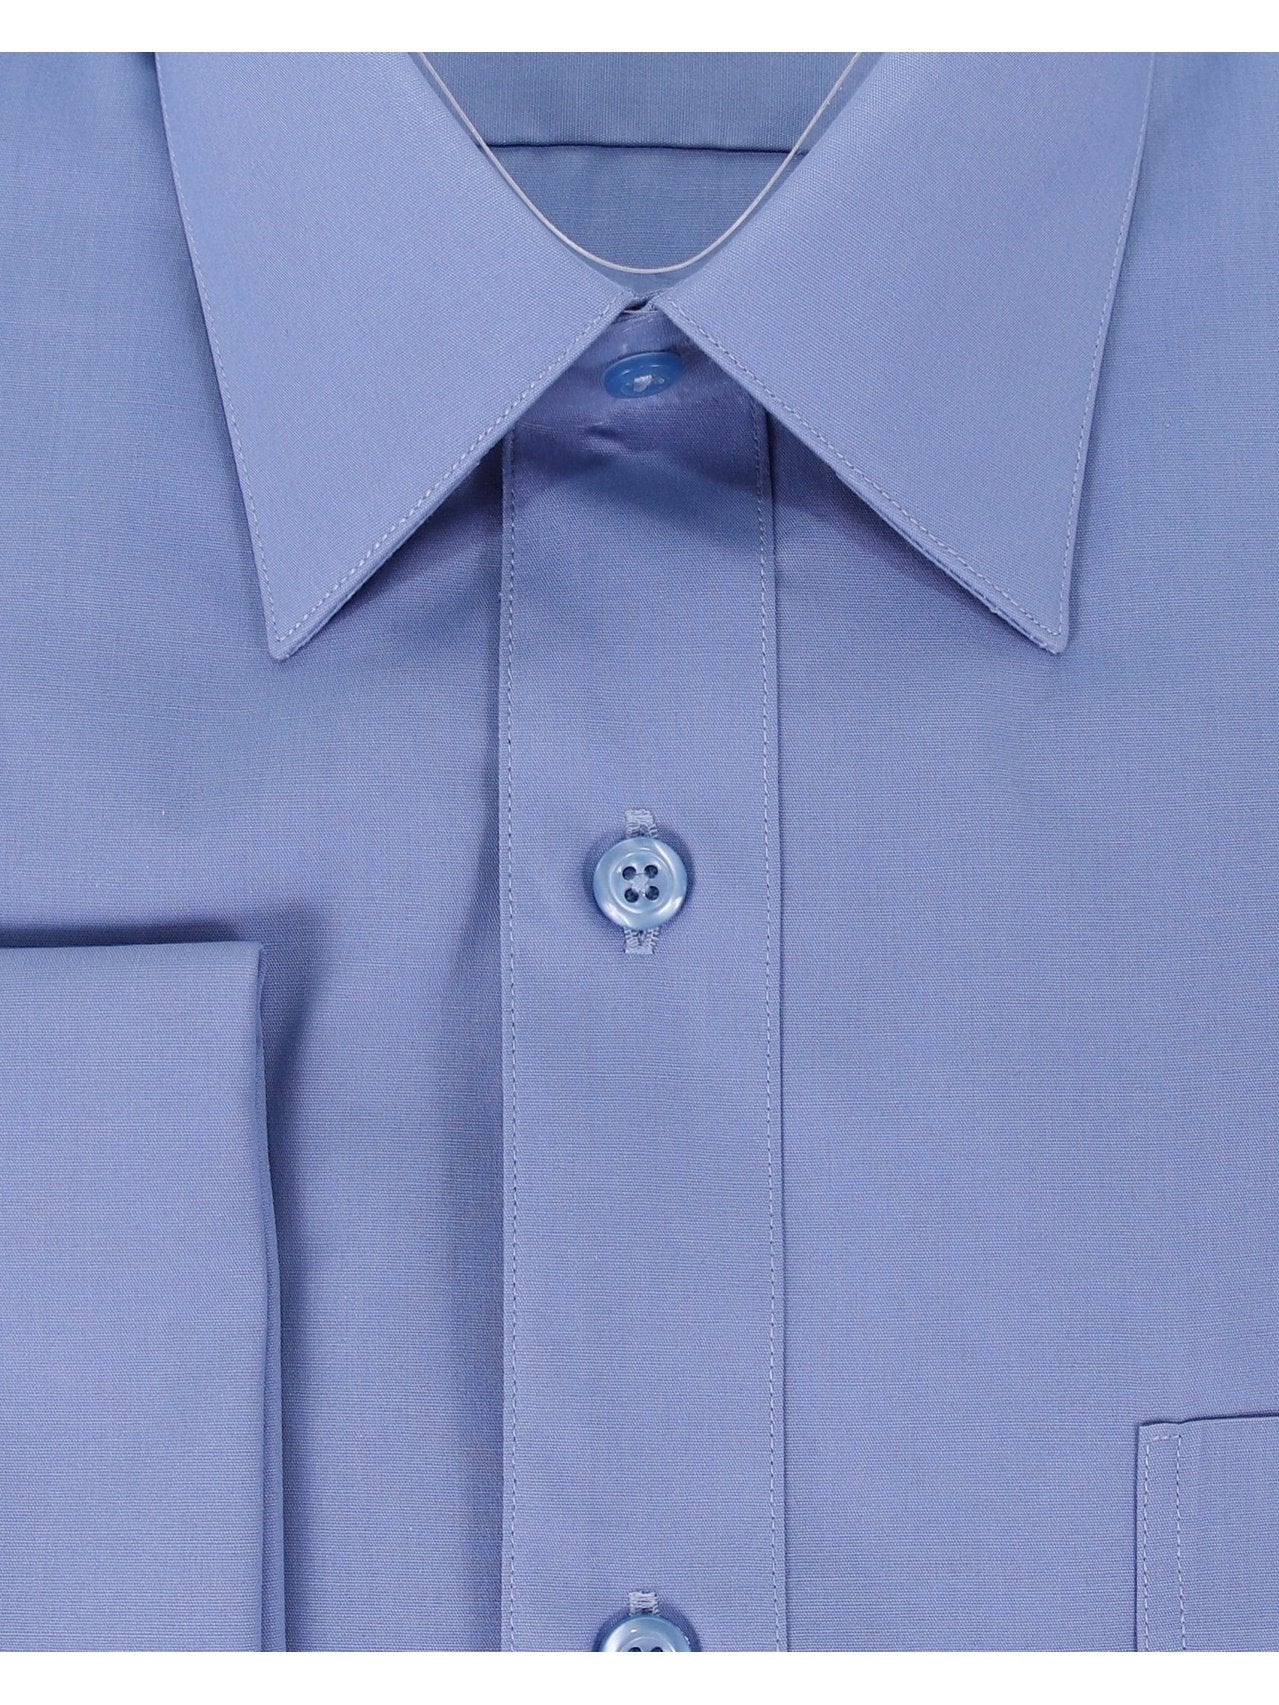 Brand M SHIRTS Mens Solid Blue Regular Fit Spread Collar French Cuff Dress Shirt